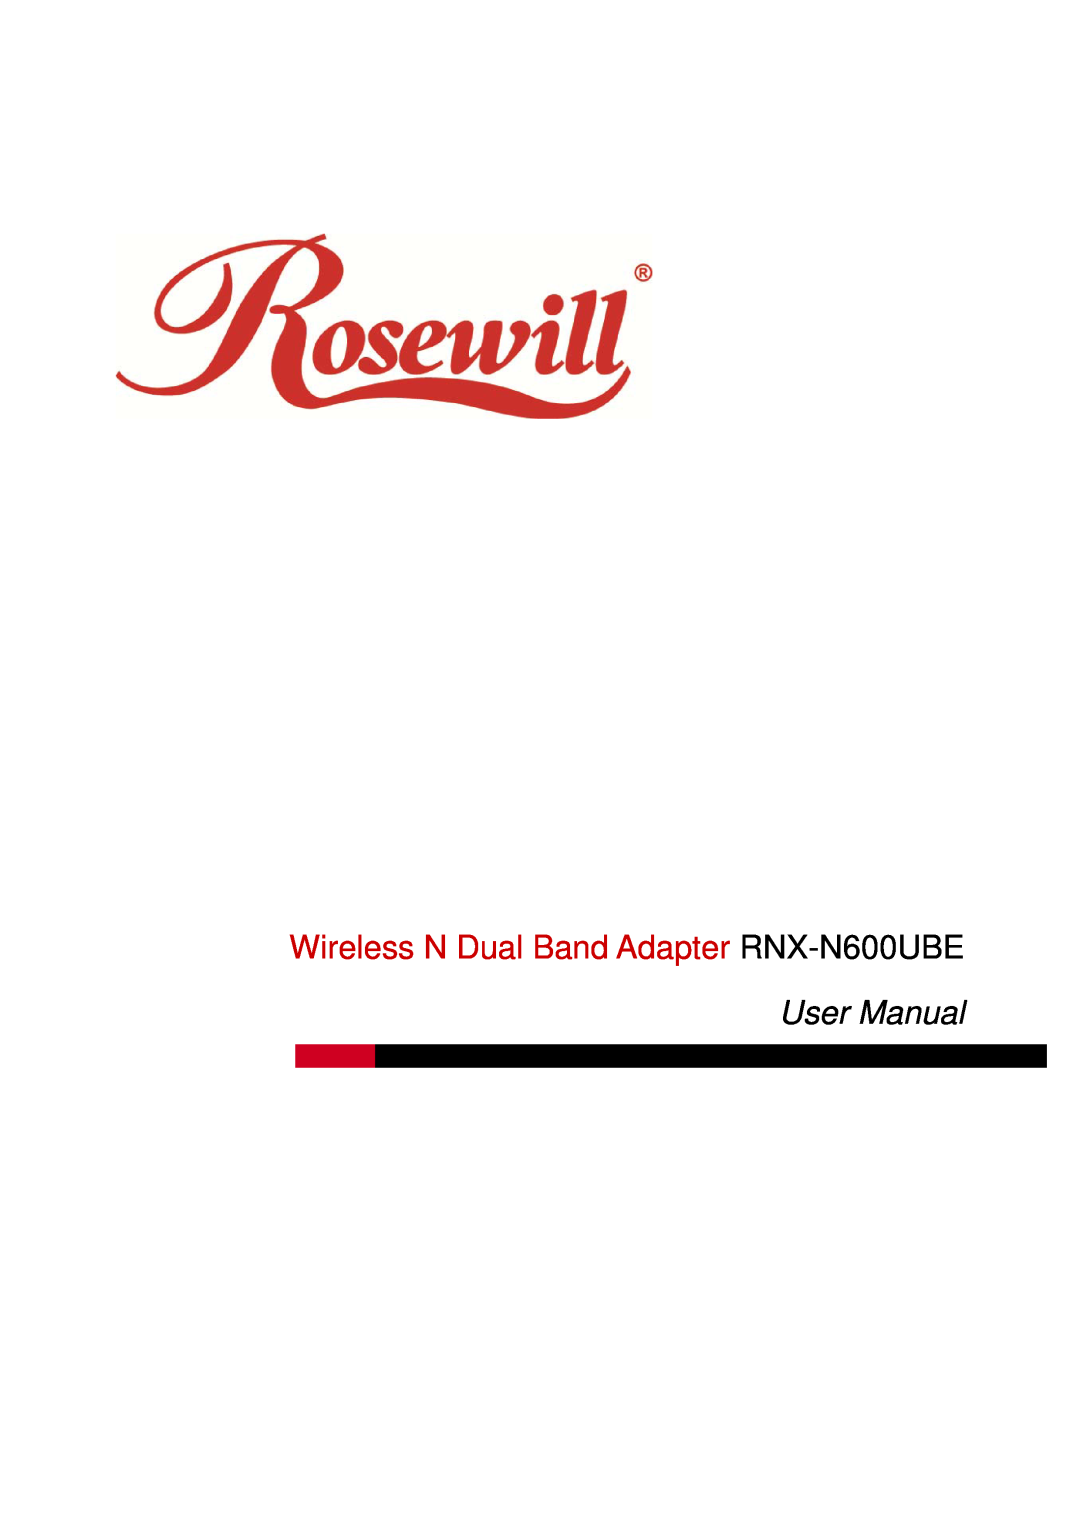 Rosewill user manual Wireless N Dual Band Adapter RNX-N600UBE, User Manual 